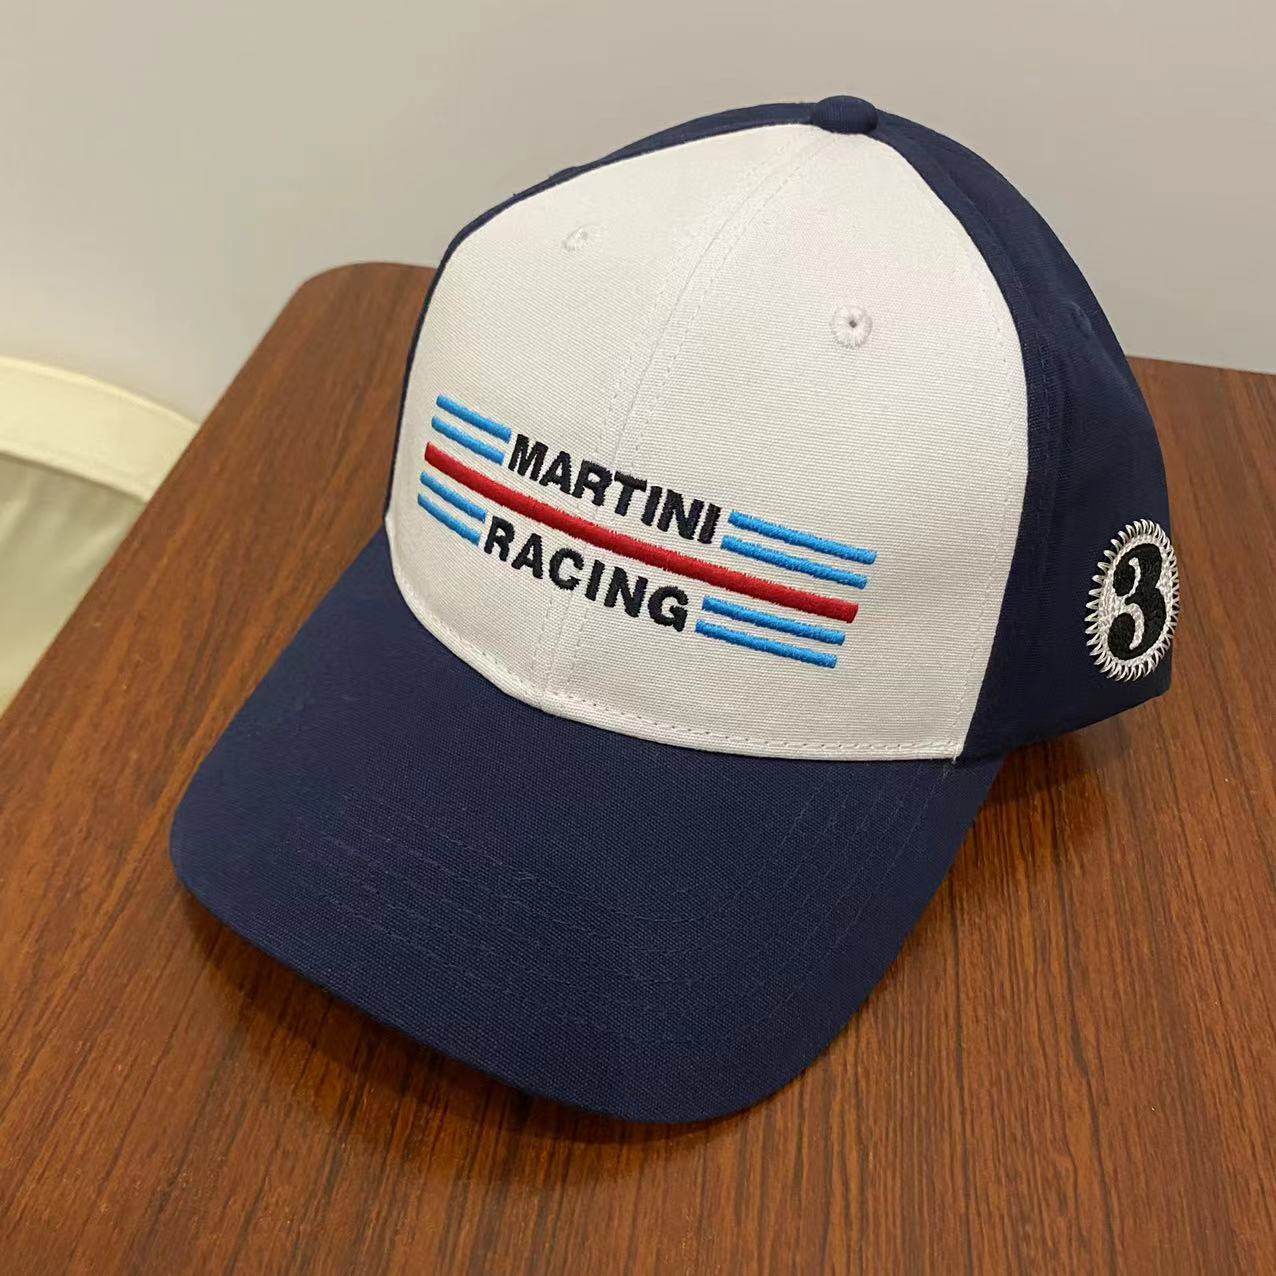 Porsche Martini Baseball Hat with lining 100% cotton